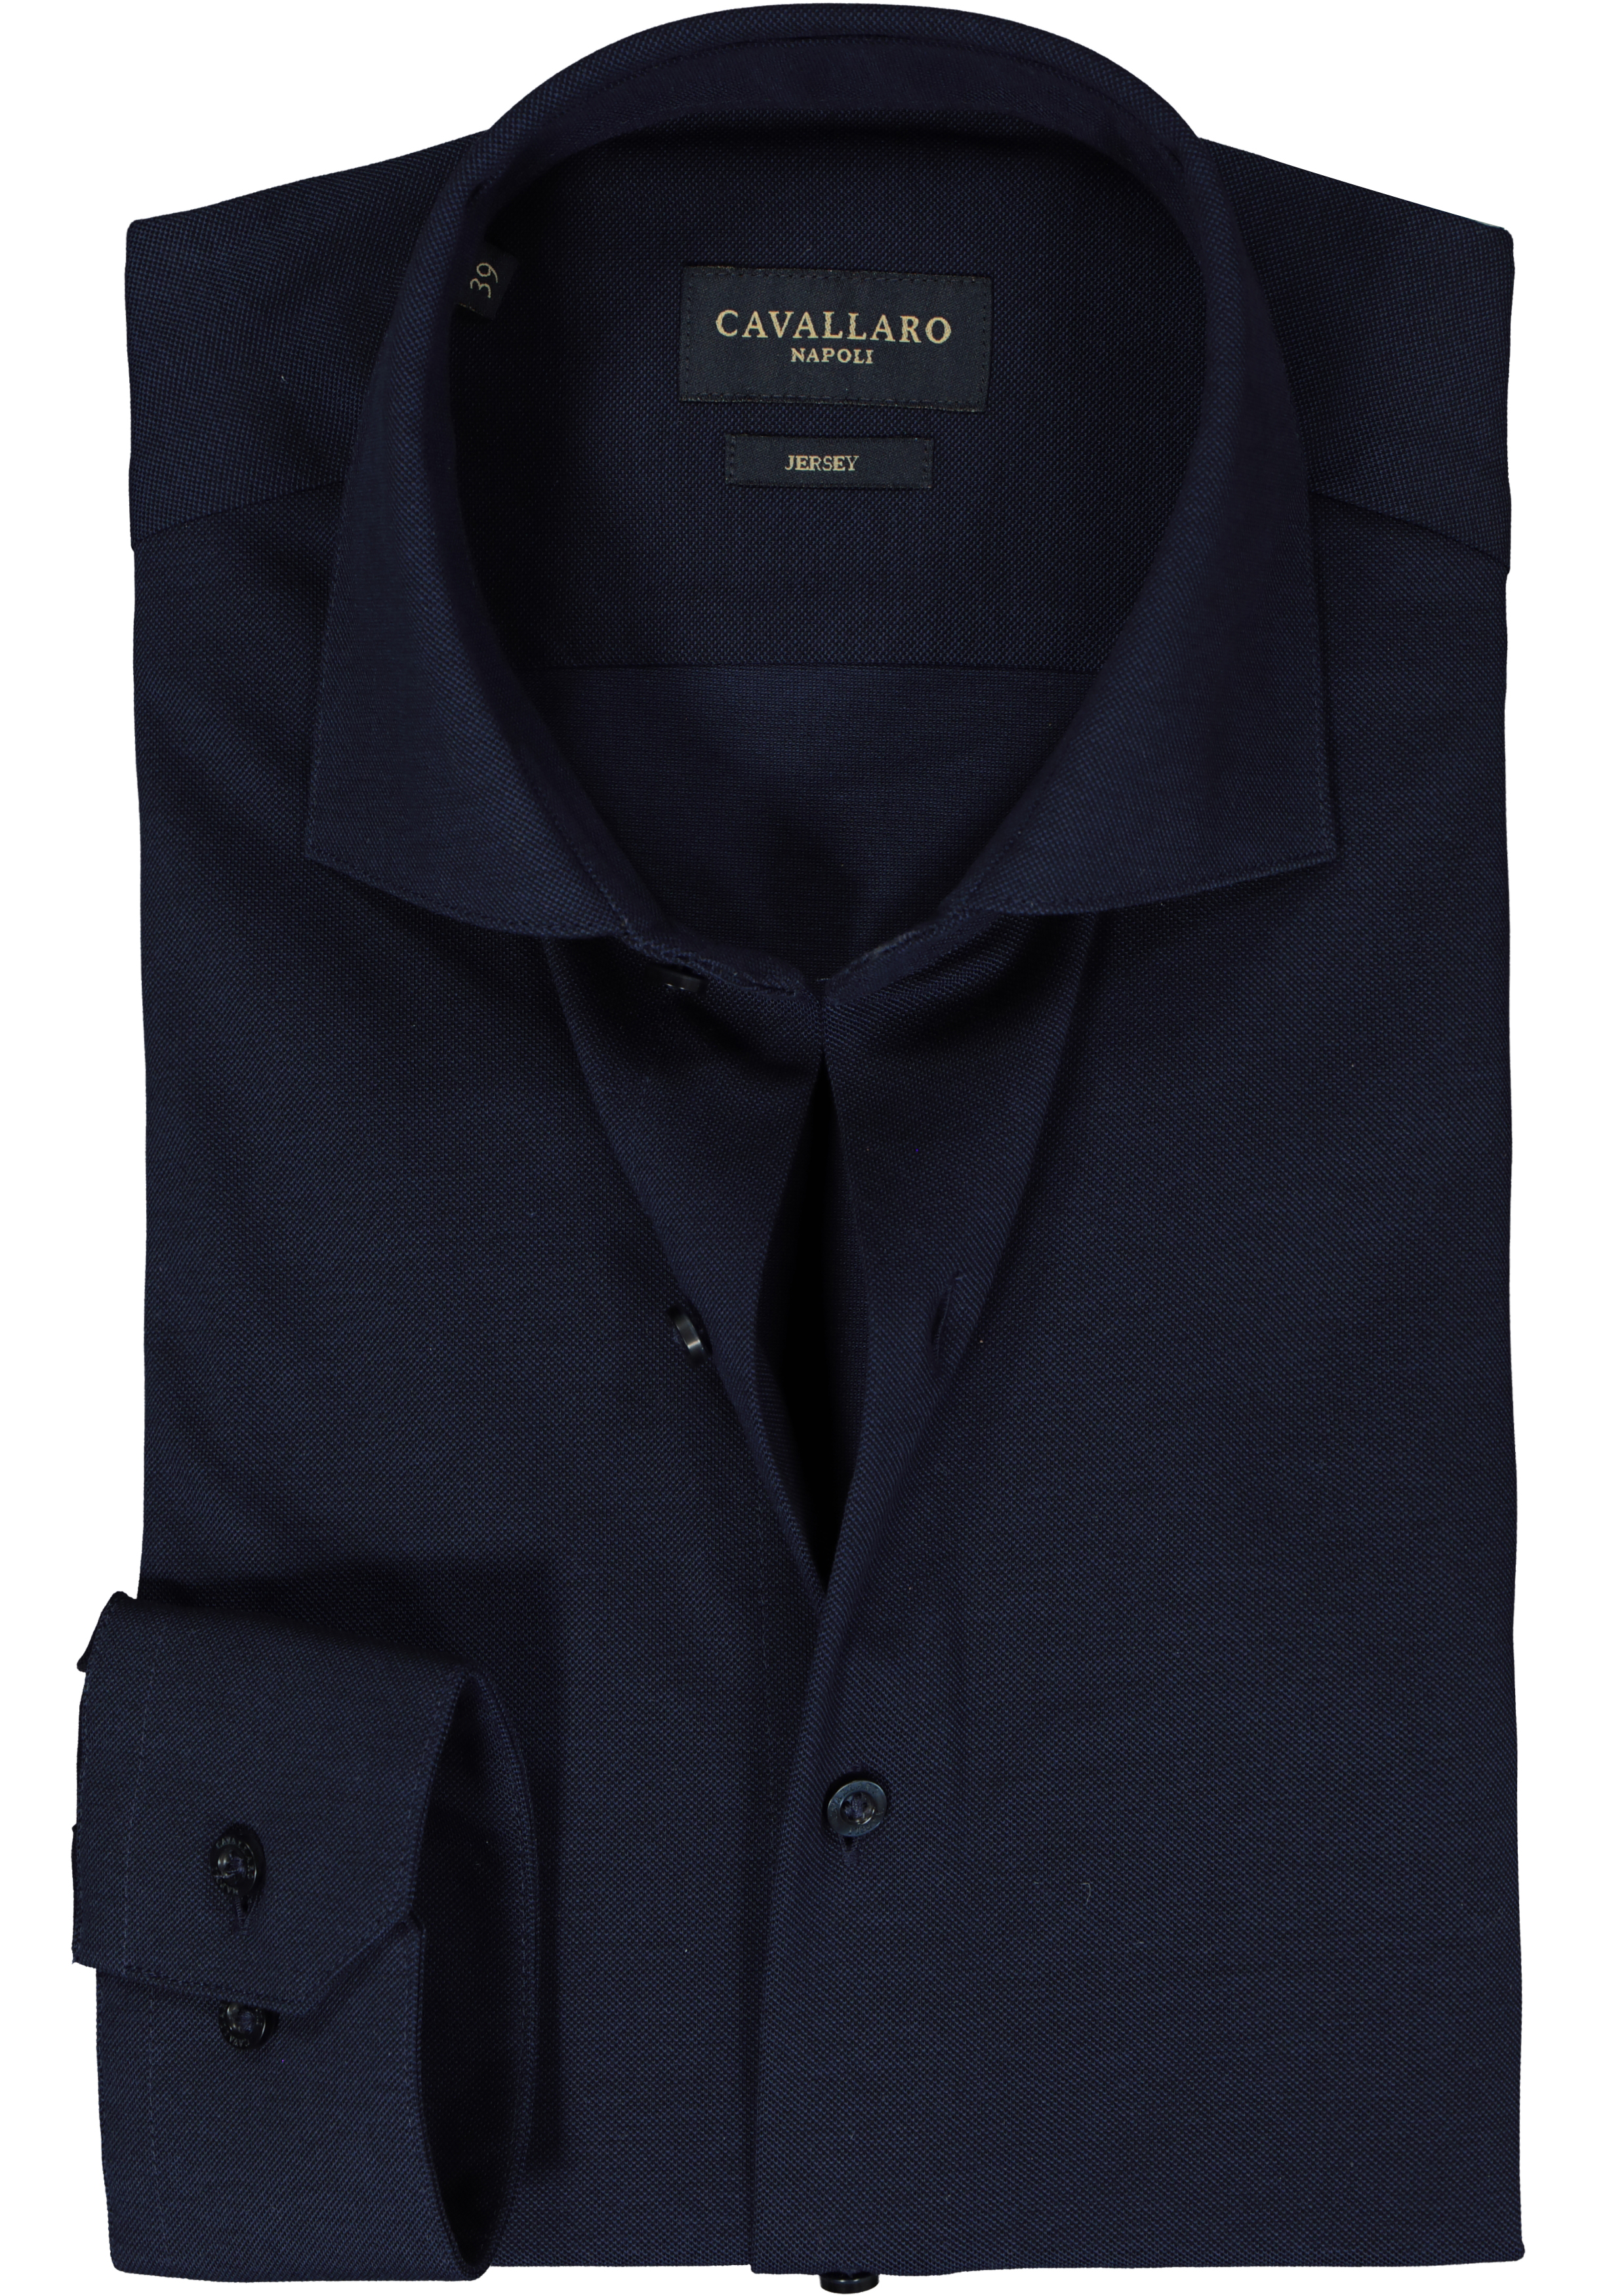 Cavallaro Napoli slim fit overhemd, tricot, donkerblauw